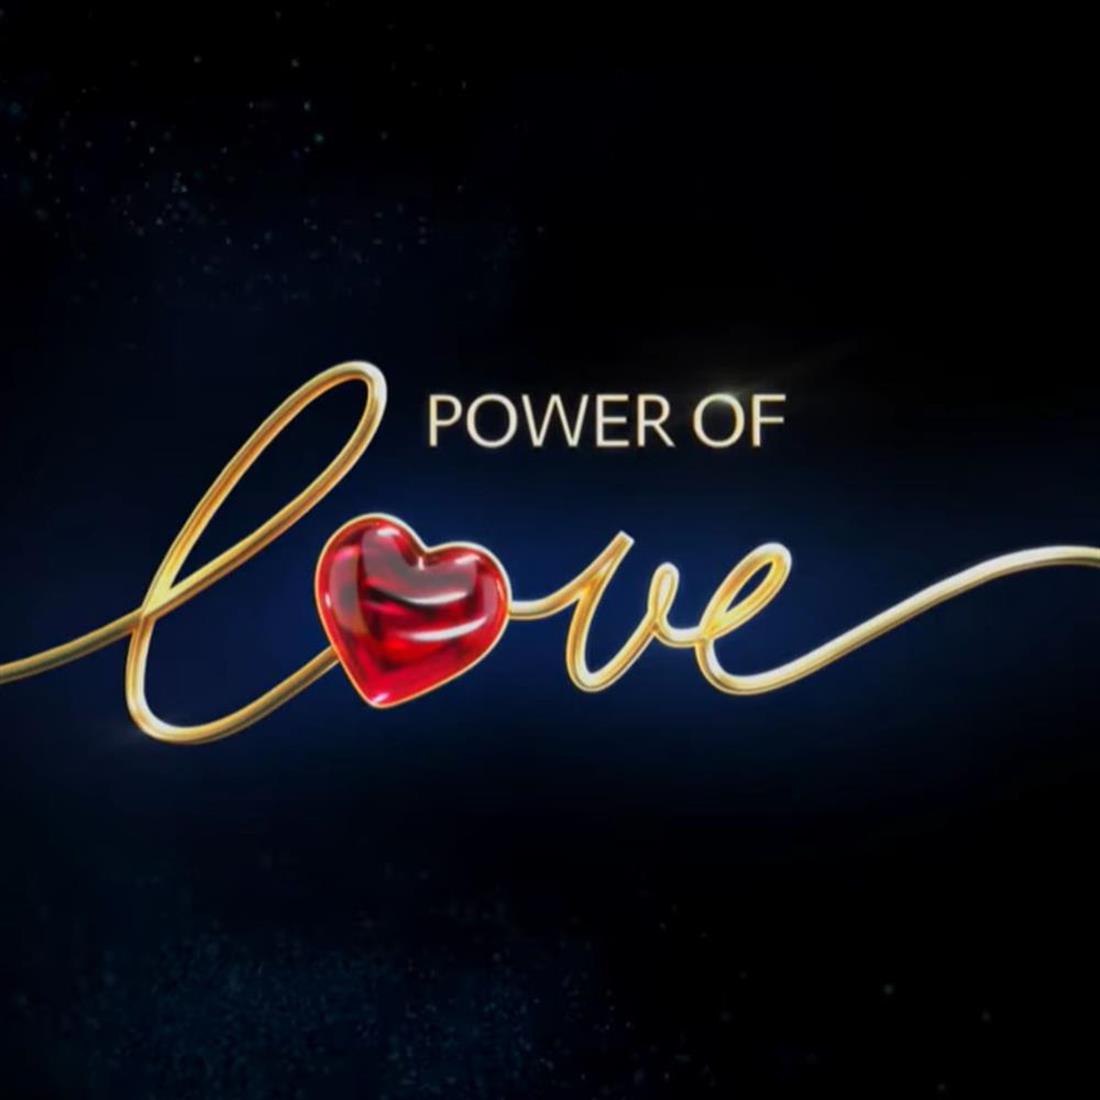 Power of Love: Αυτή θα είναι η παρουσιάστρια - Η αποκάλυψη on air
